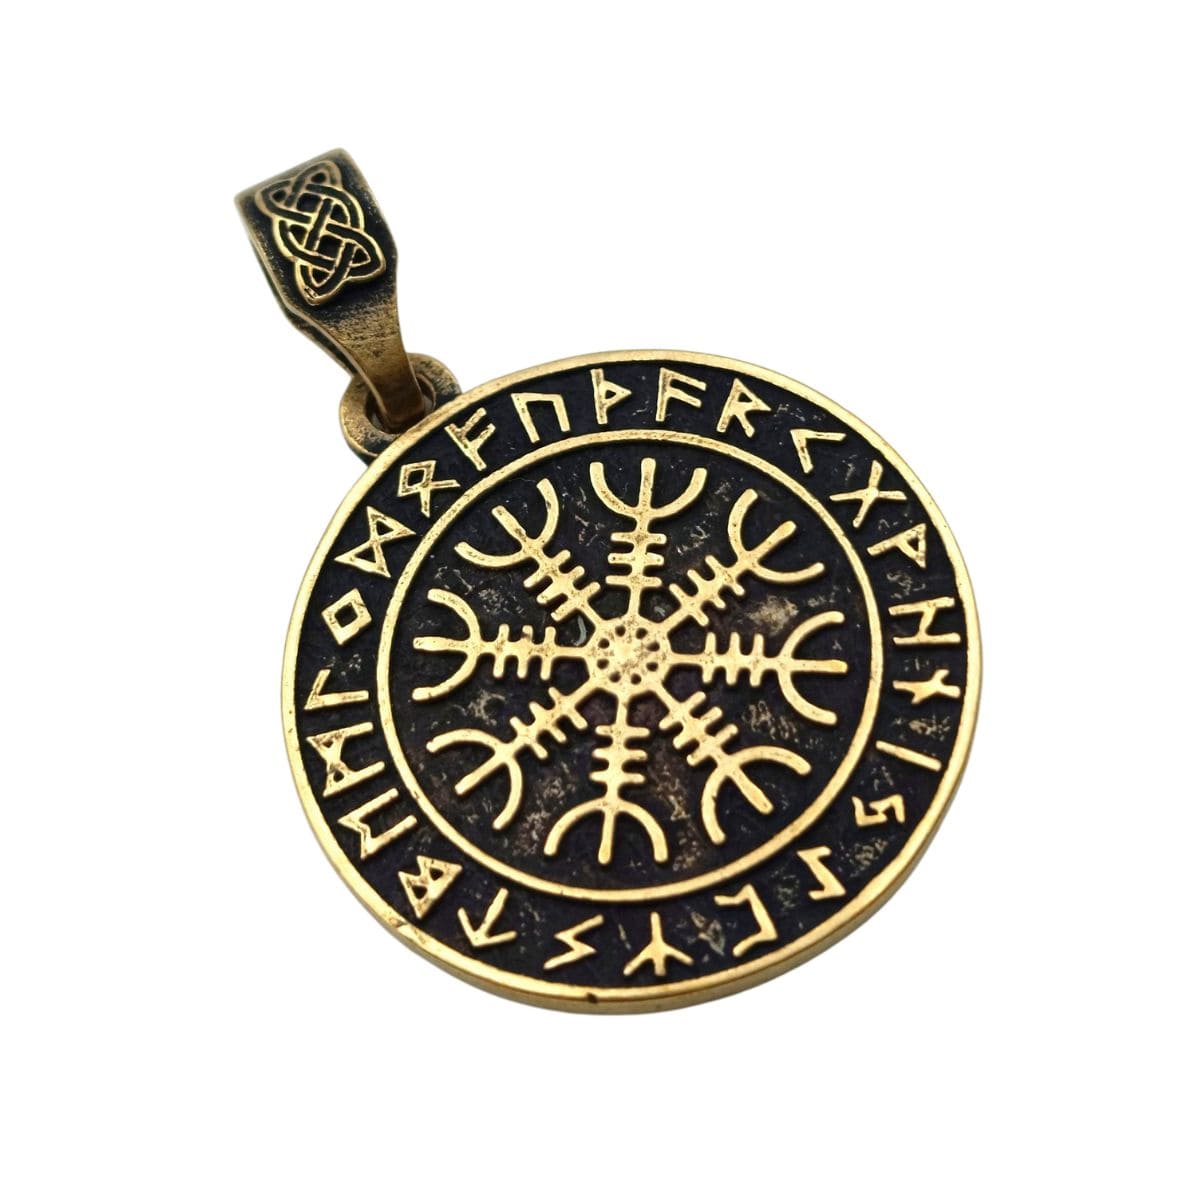 Helm of awe in circle of Elder Futhark runes bronze pendant